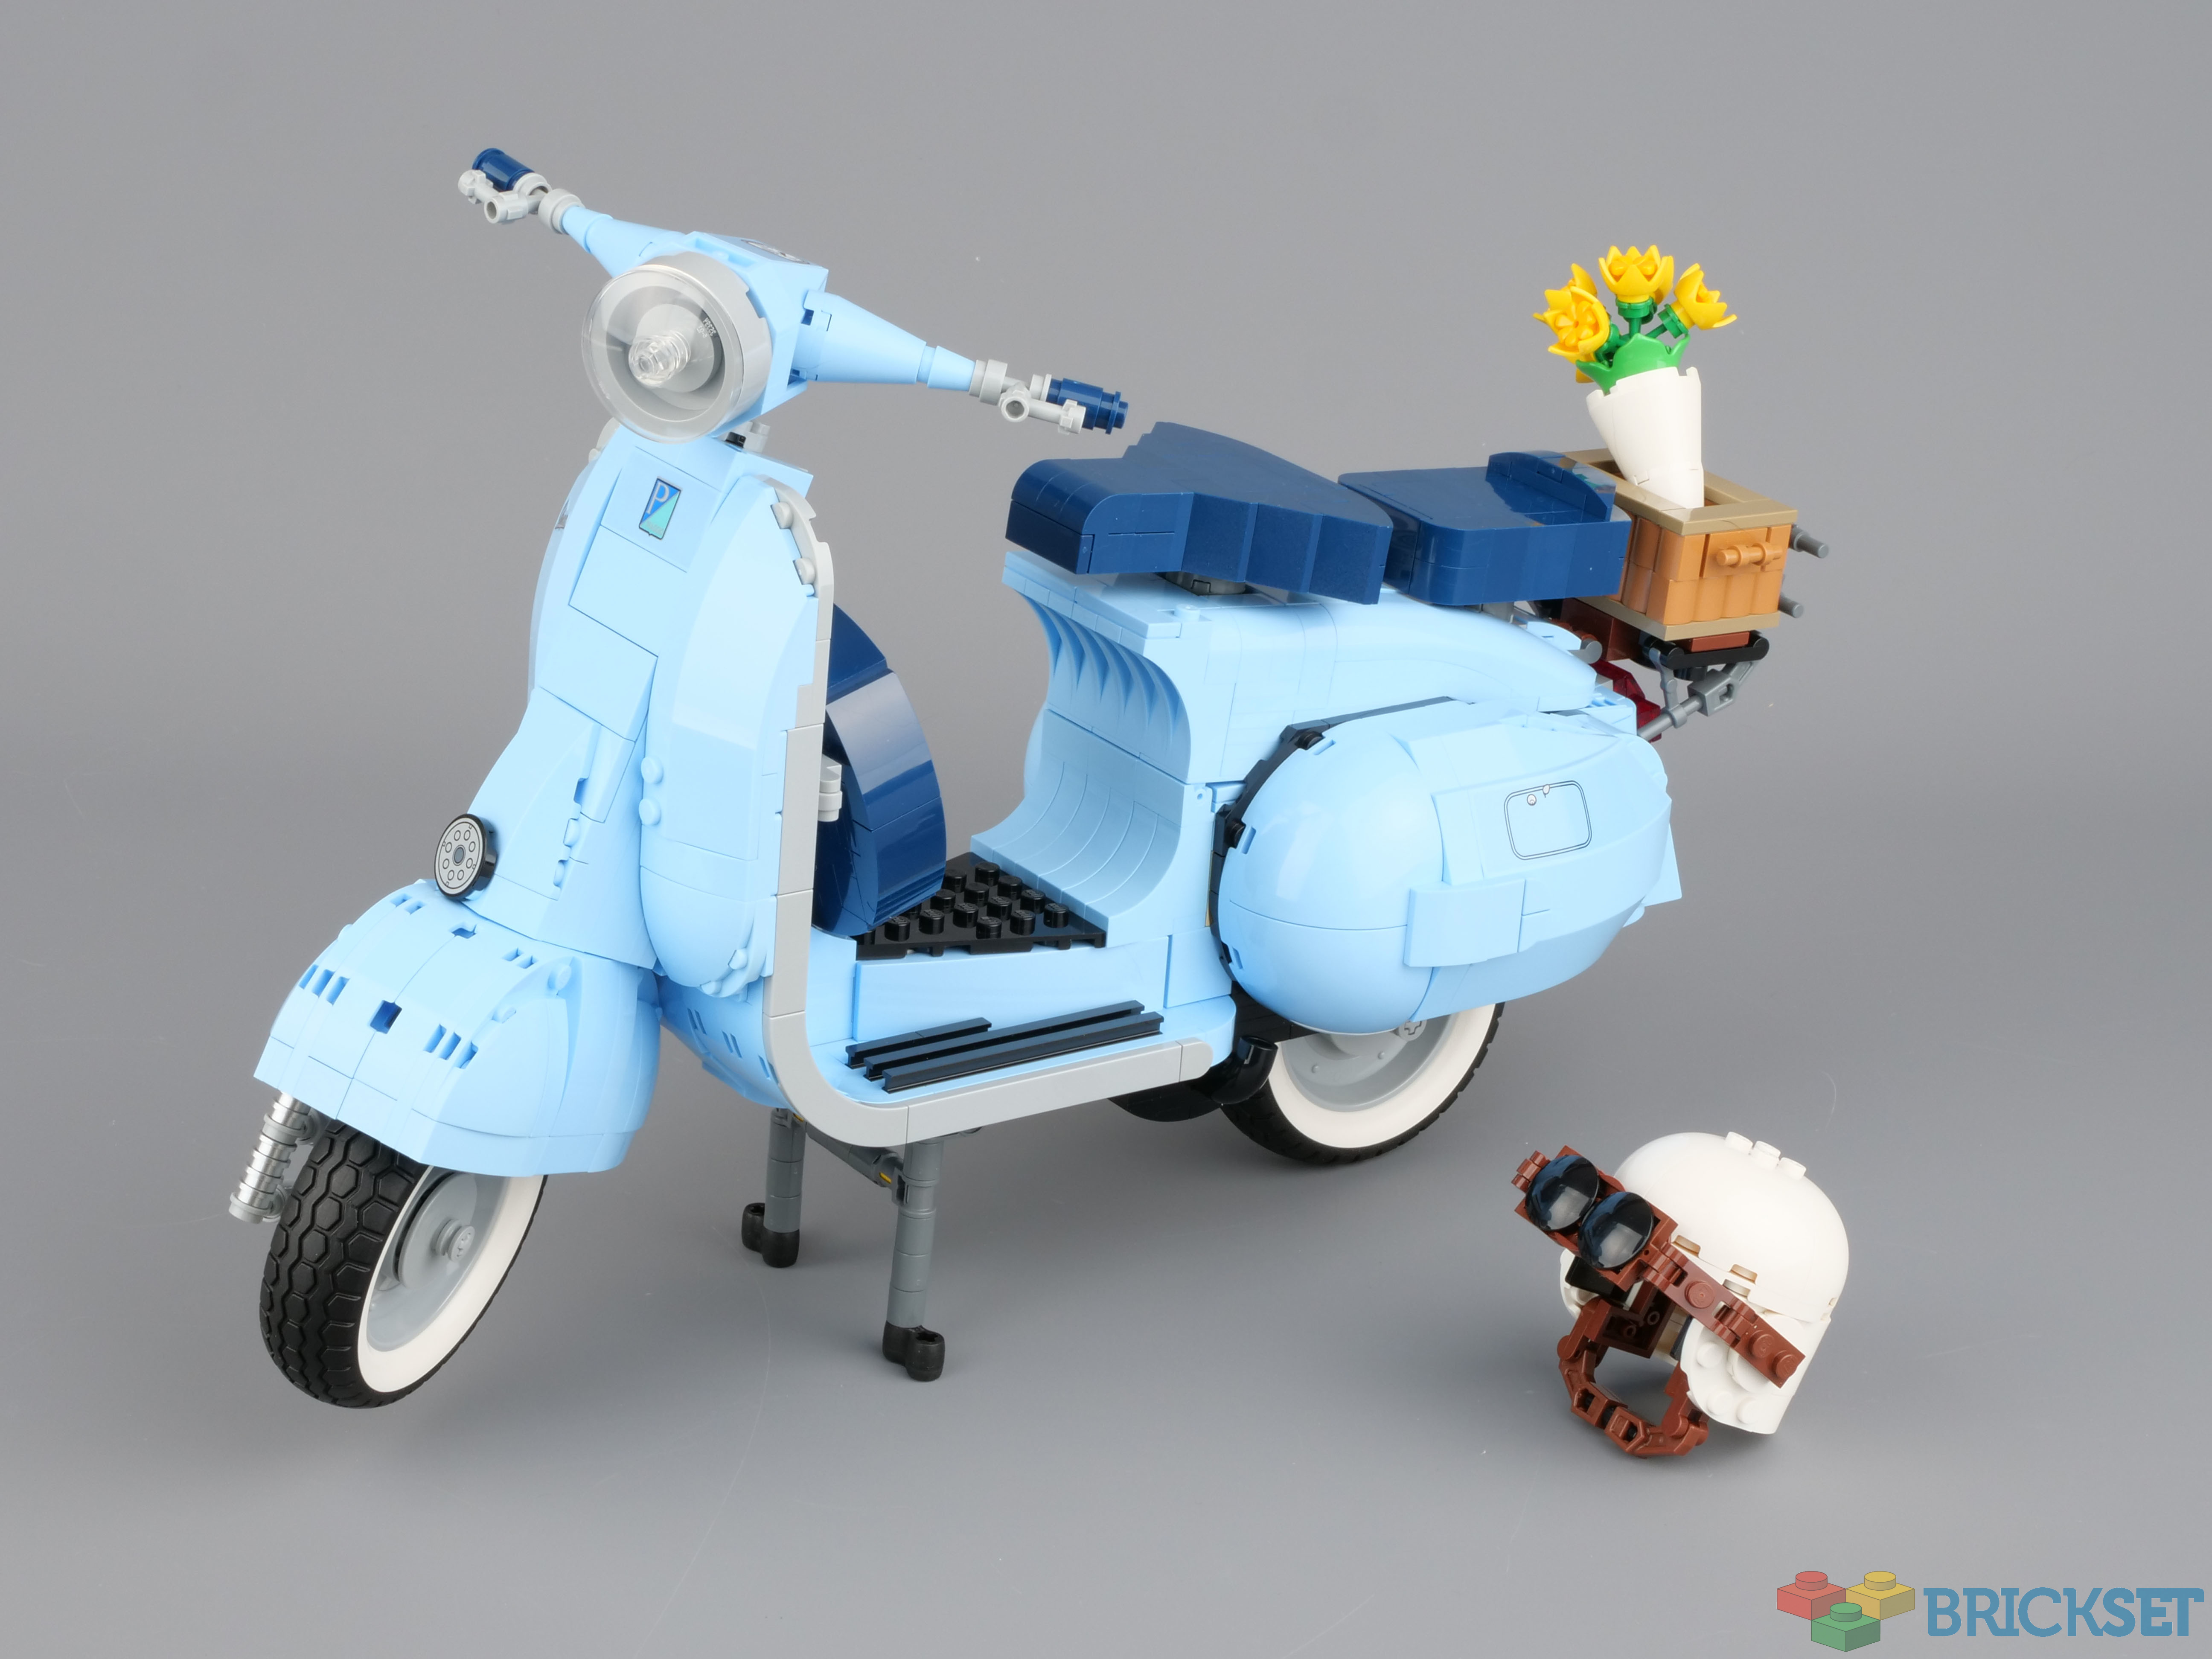 LEGO 10298 Vespa review